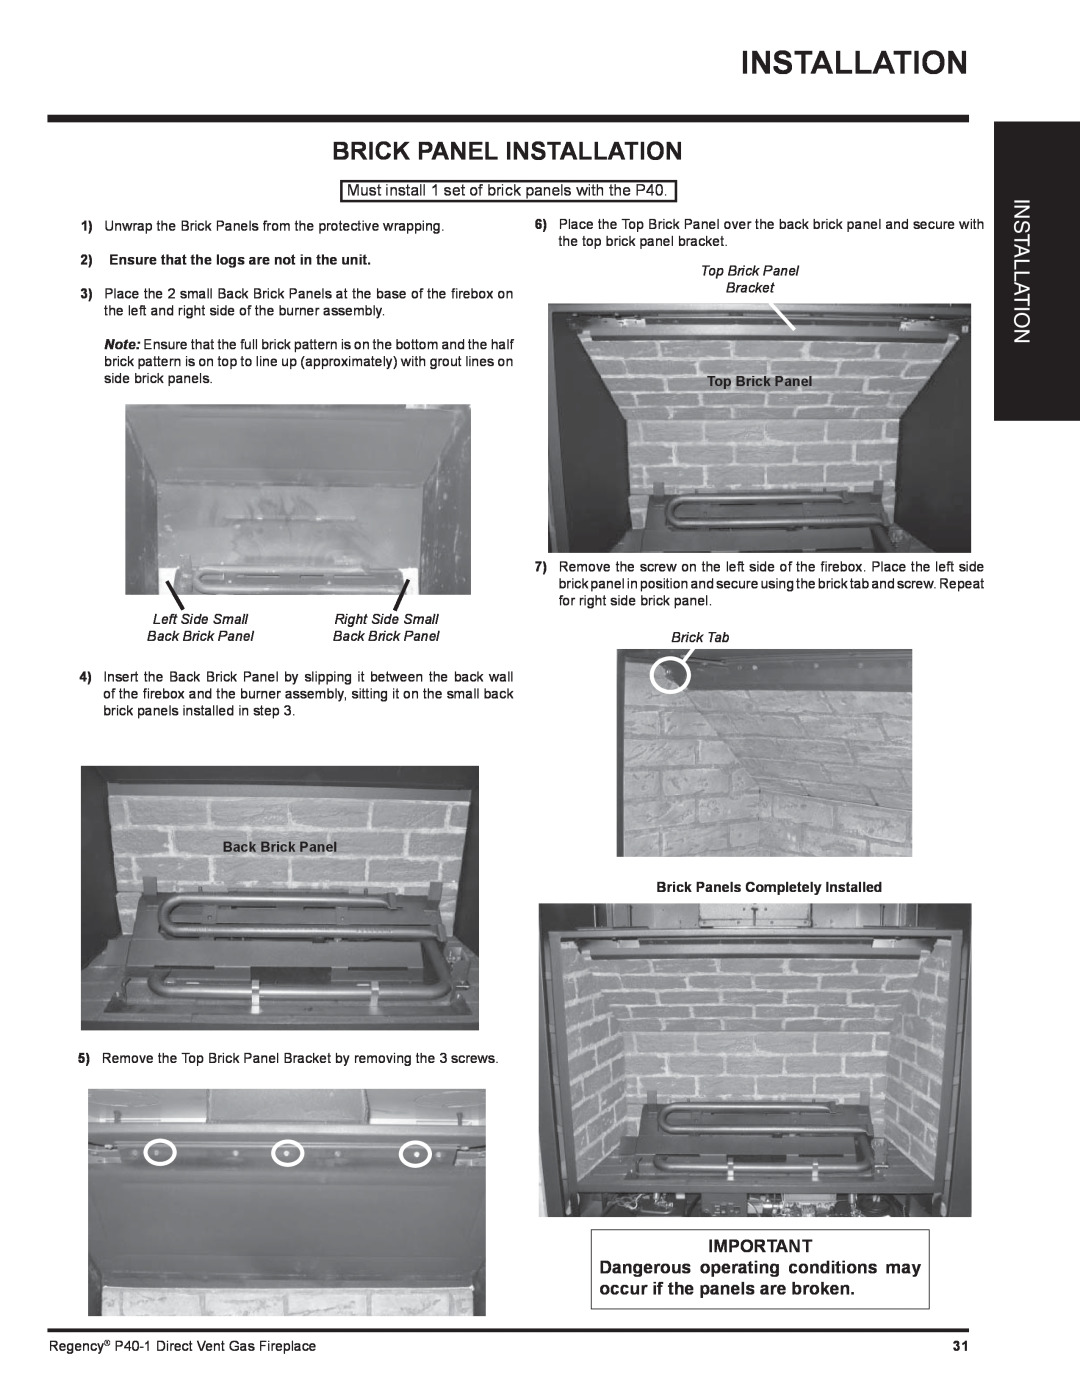 Regency P40-LP1 Brick Panel Installation, 2Ensure that the logs are not in the unit, Top Brick Panel Bracket, Brick Tab 